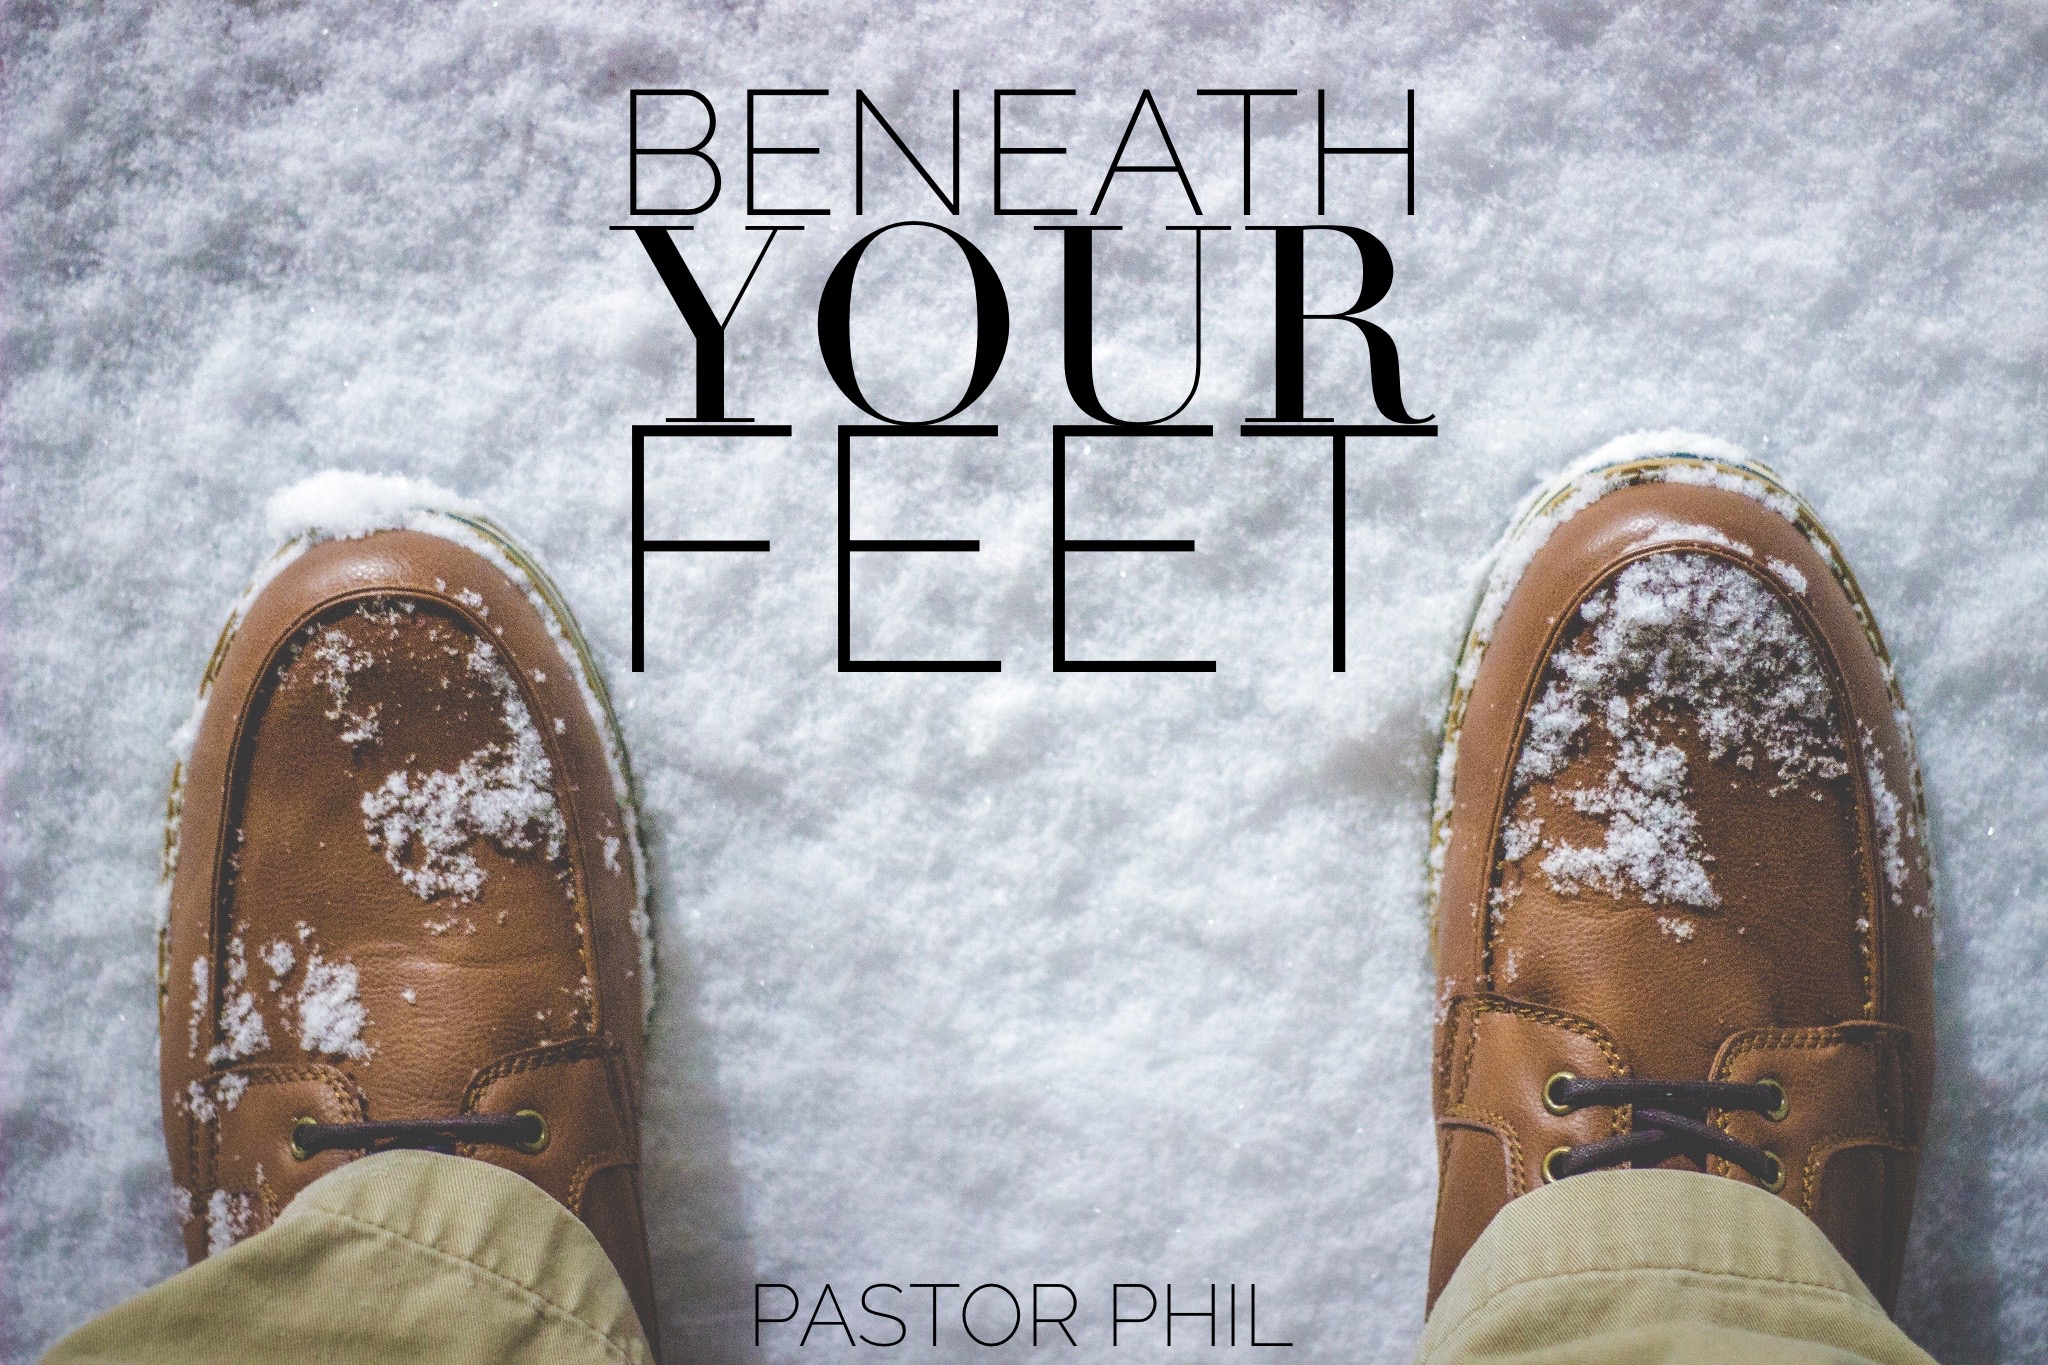 Beneath Your Feet